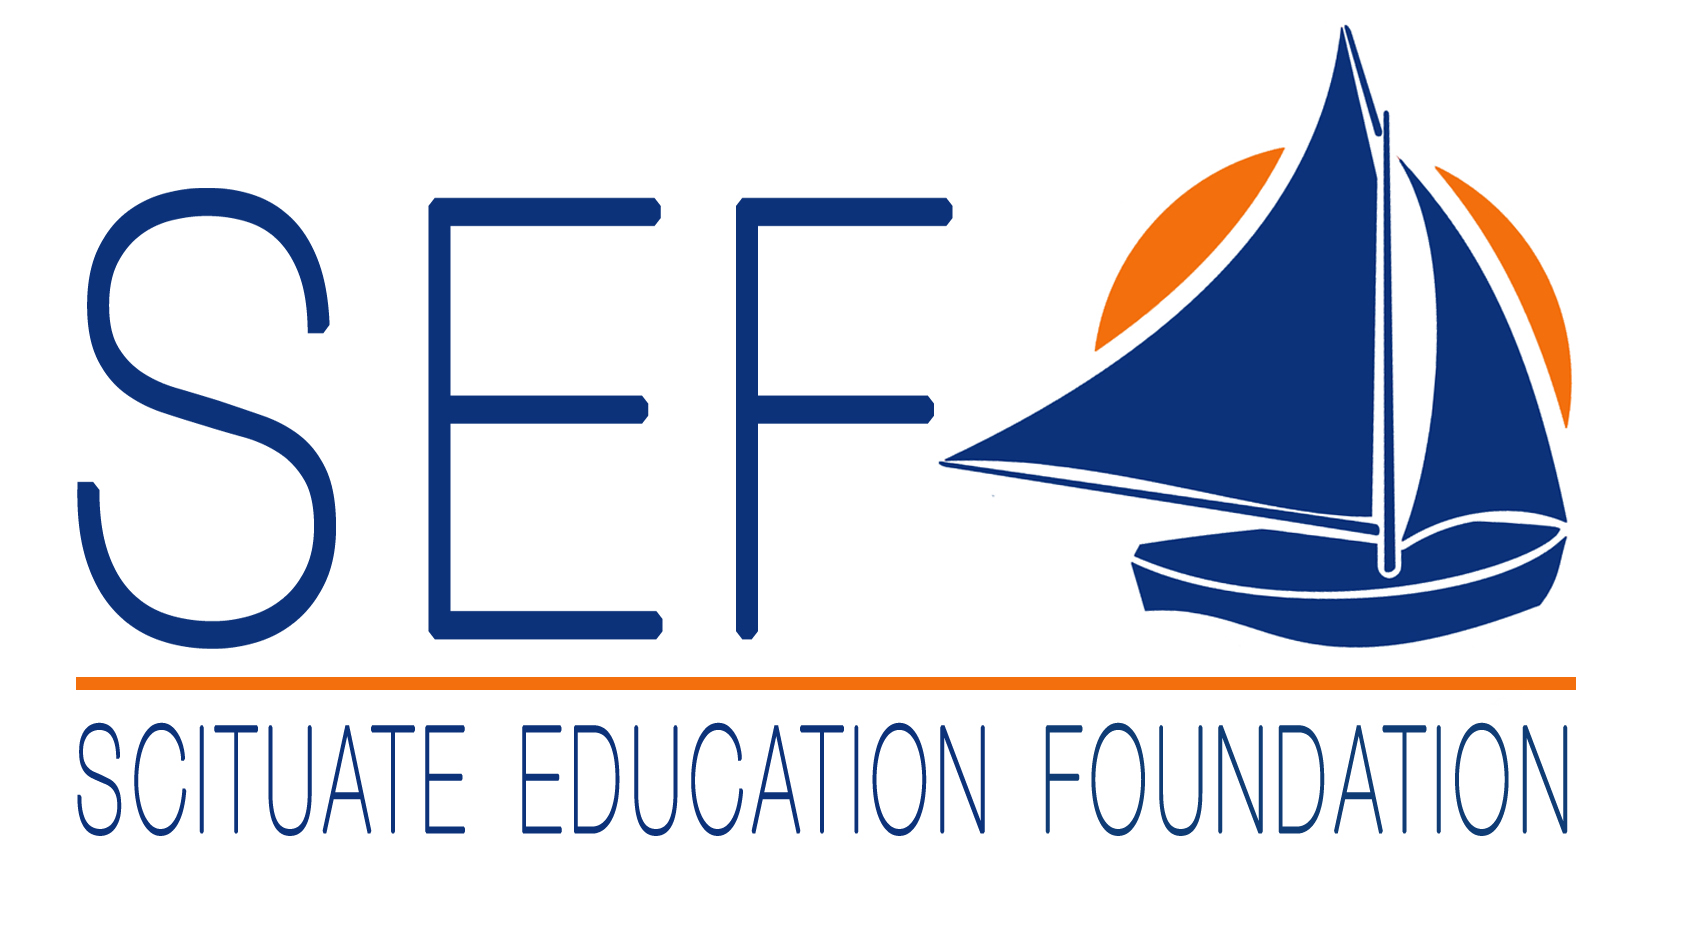 Scituate Education Foundation logo